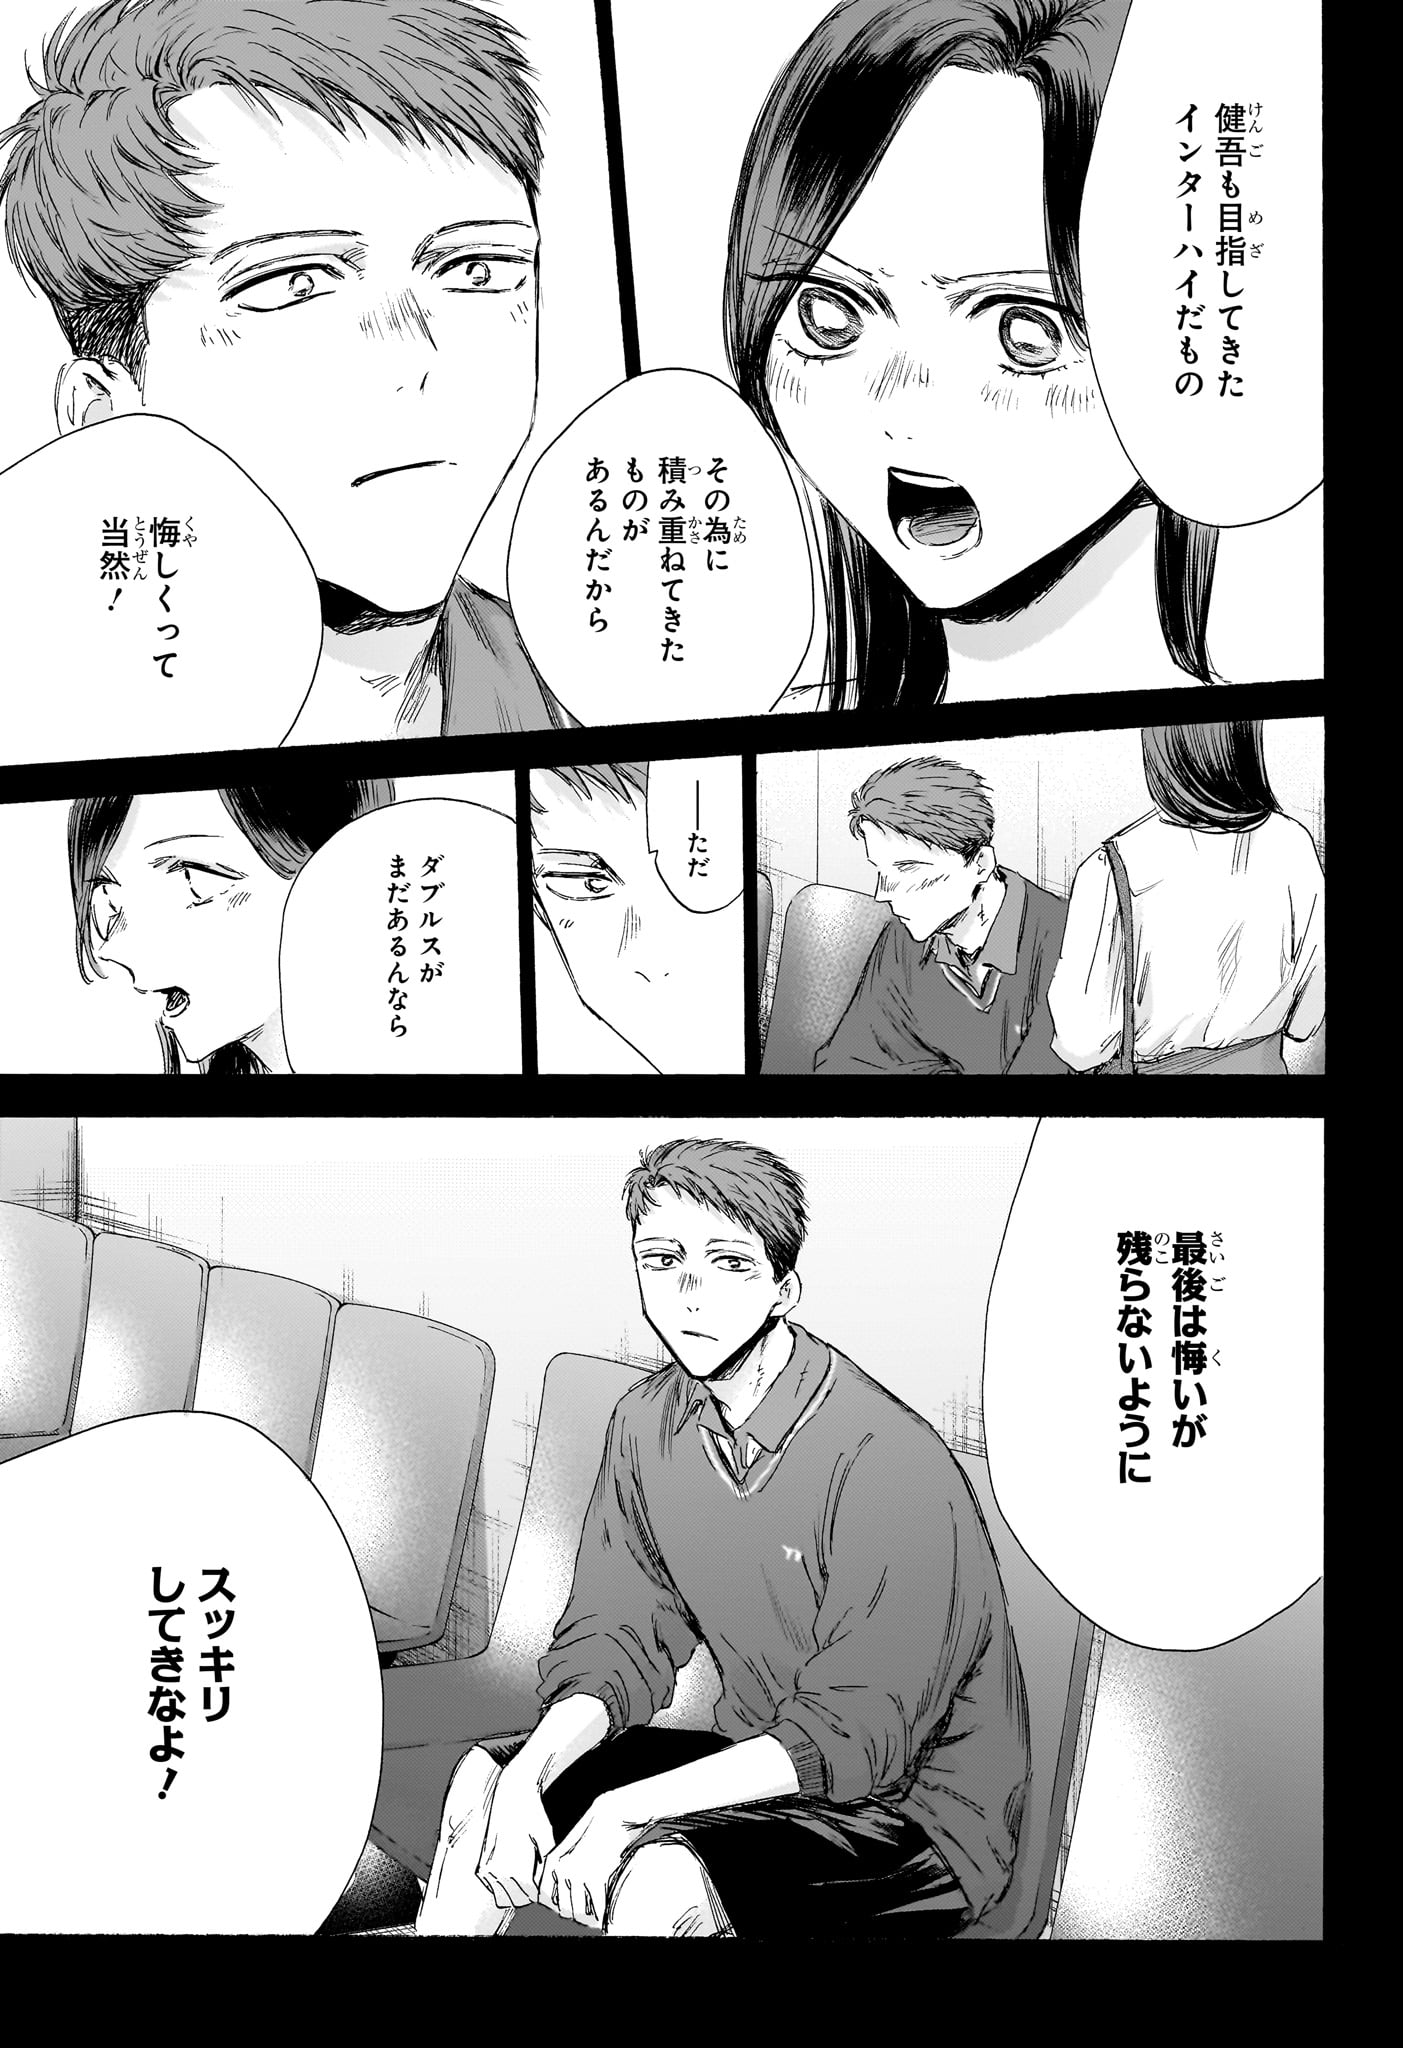 Ao no Hako - Chapter 154 - Page 7